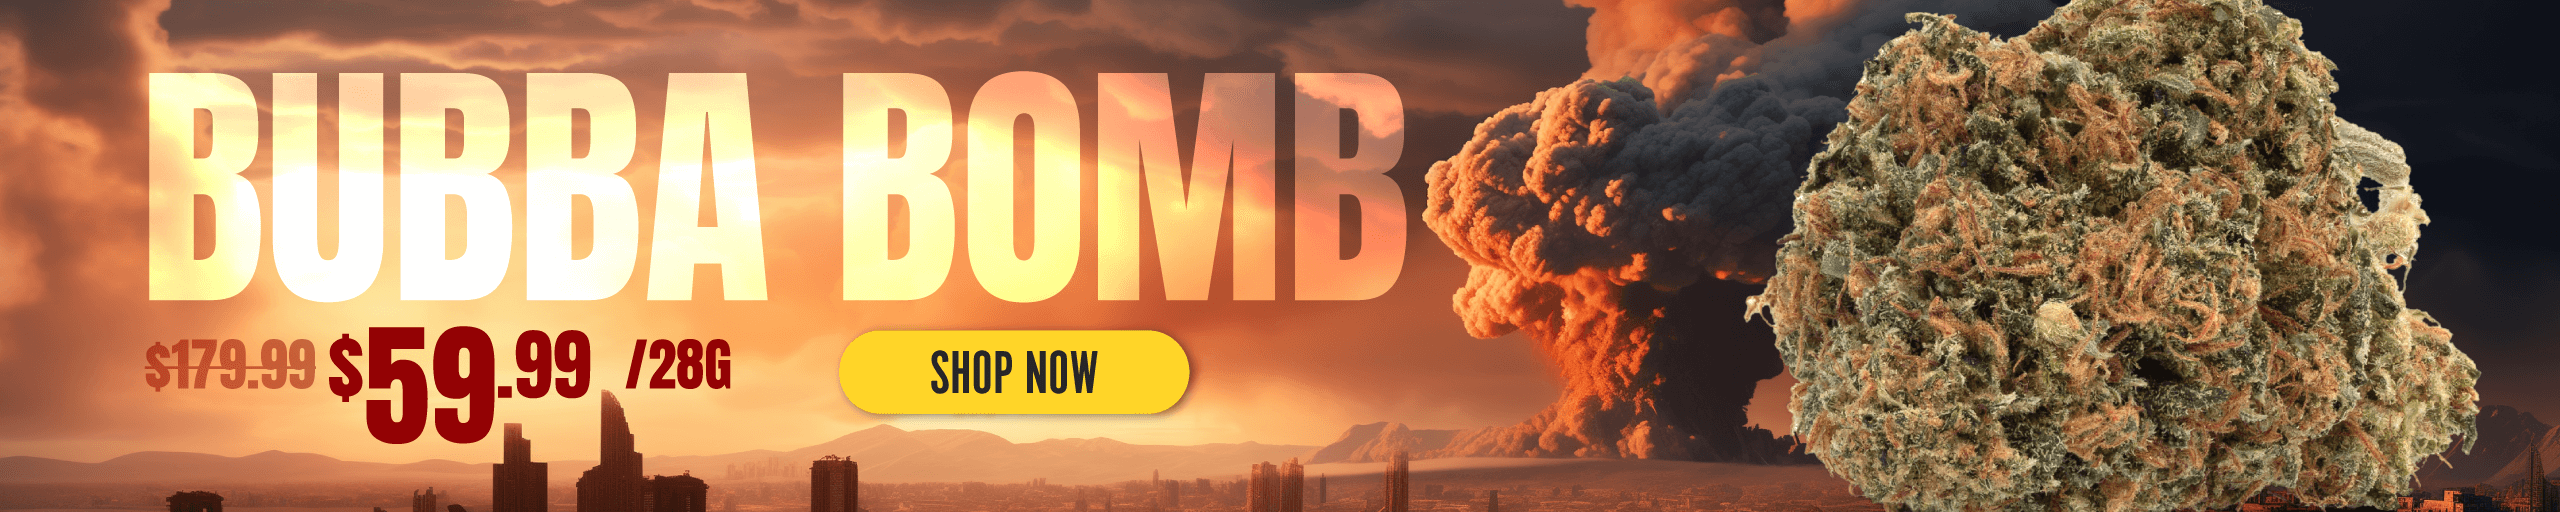 Bubba-Bomb_web